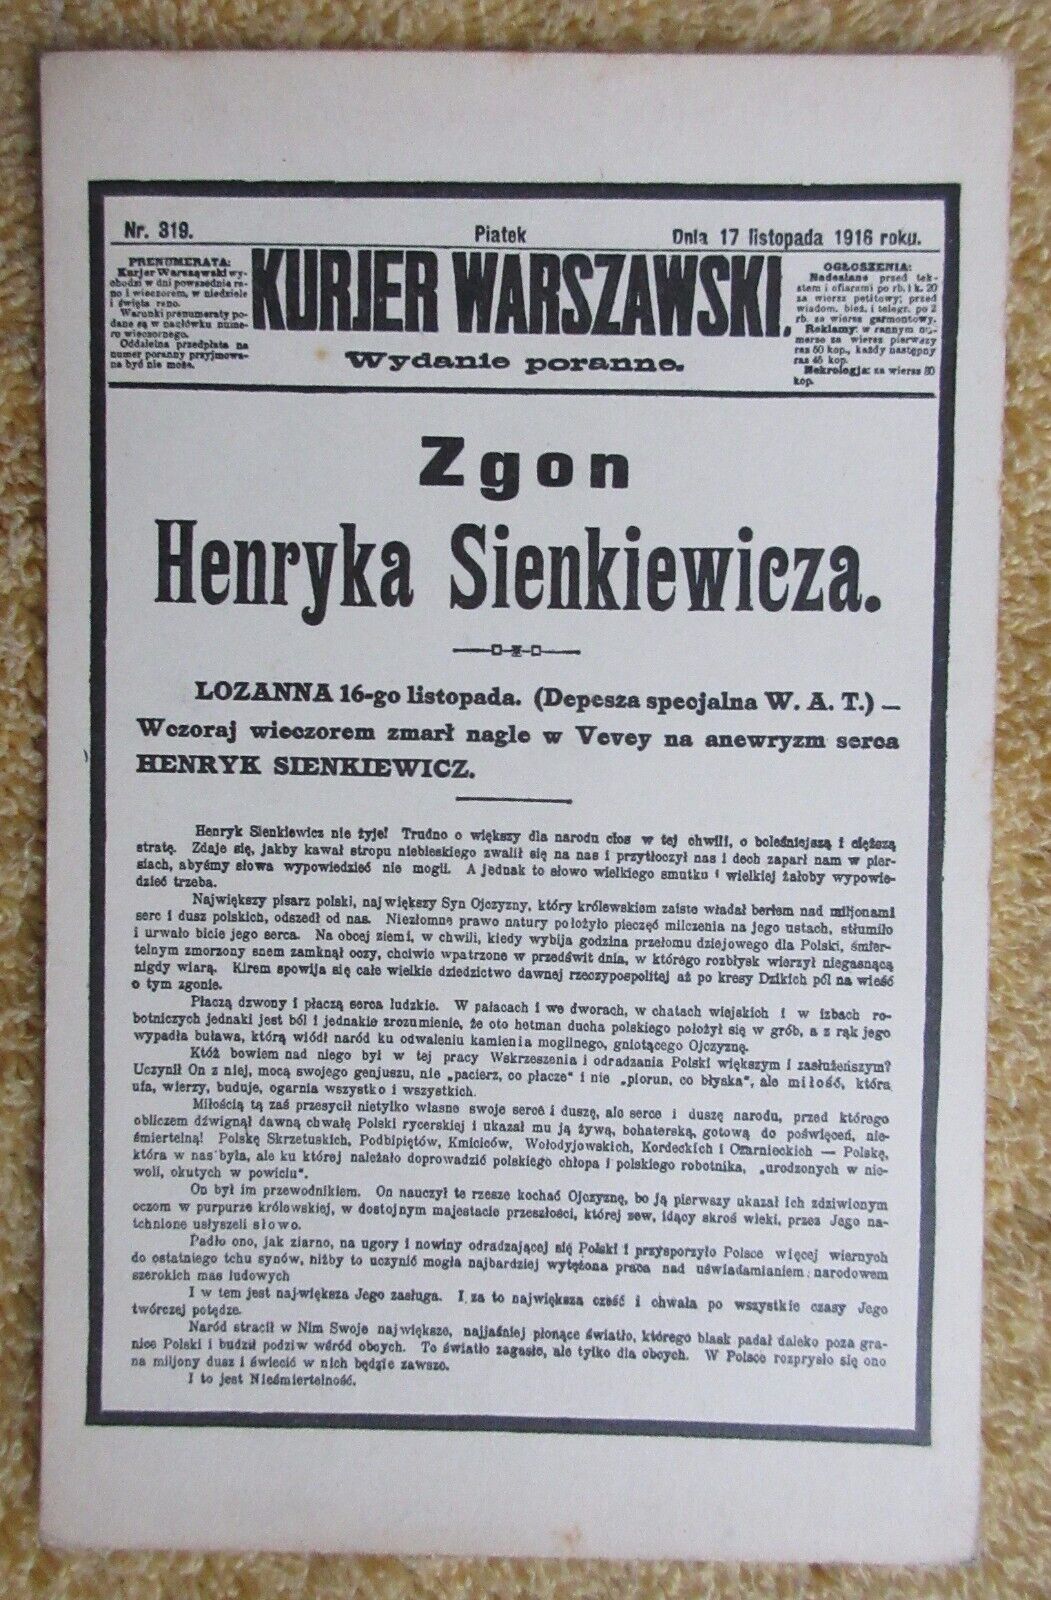 VINTAGE DEATH NOTICE POSTCARD - POLISH WRITER HENRYKA SIENKIEWICZA